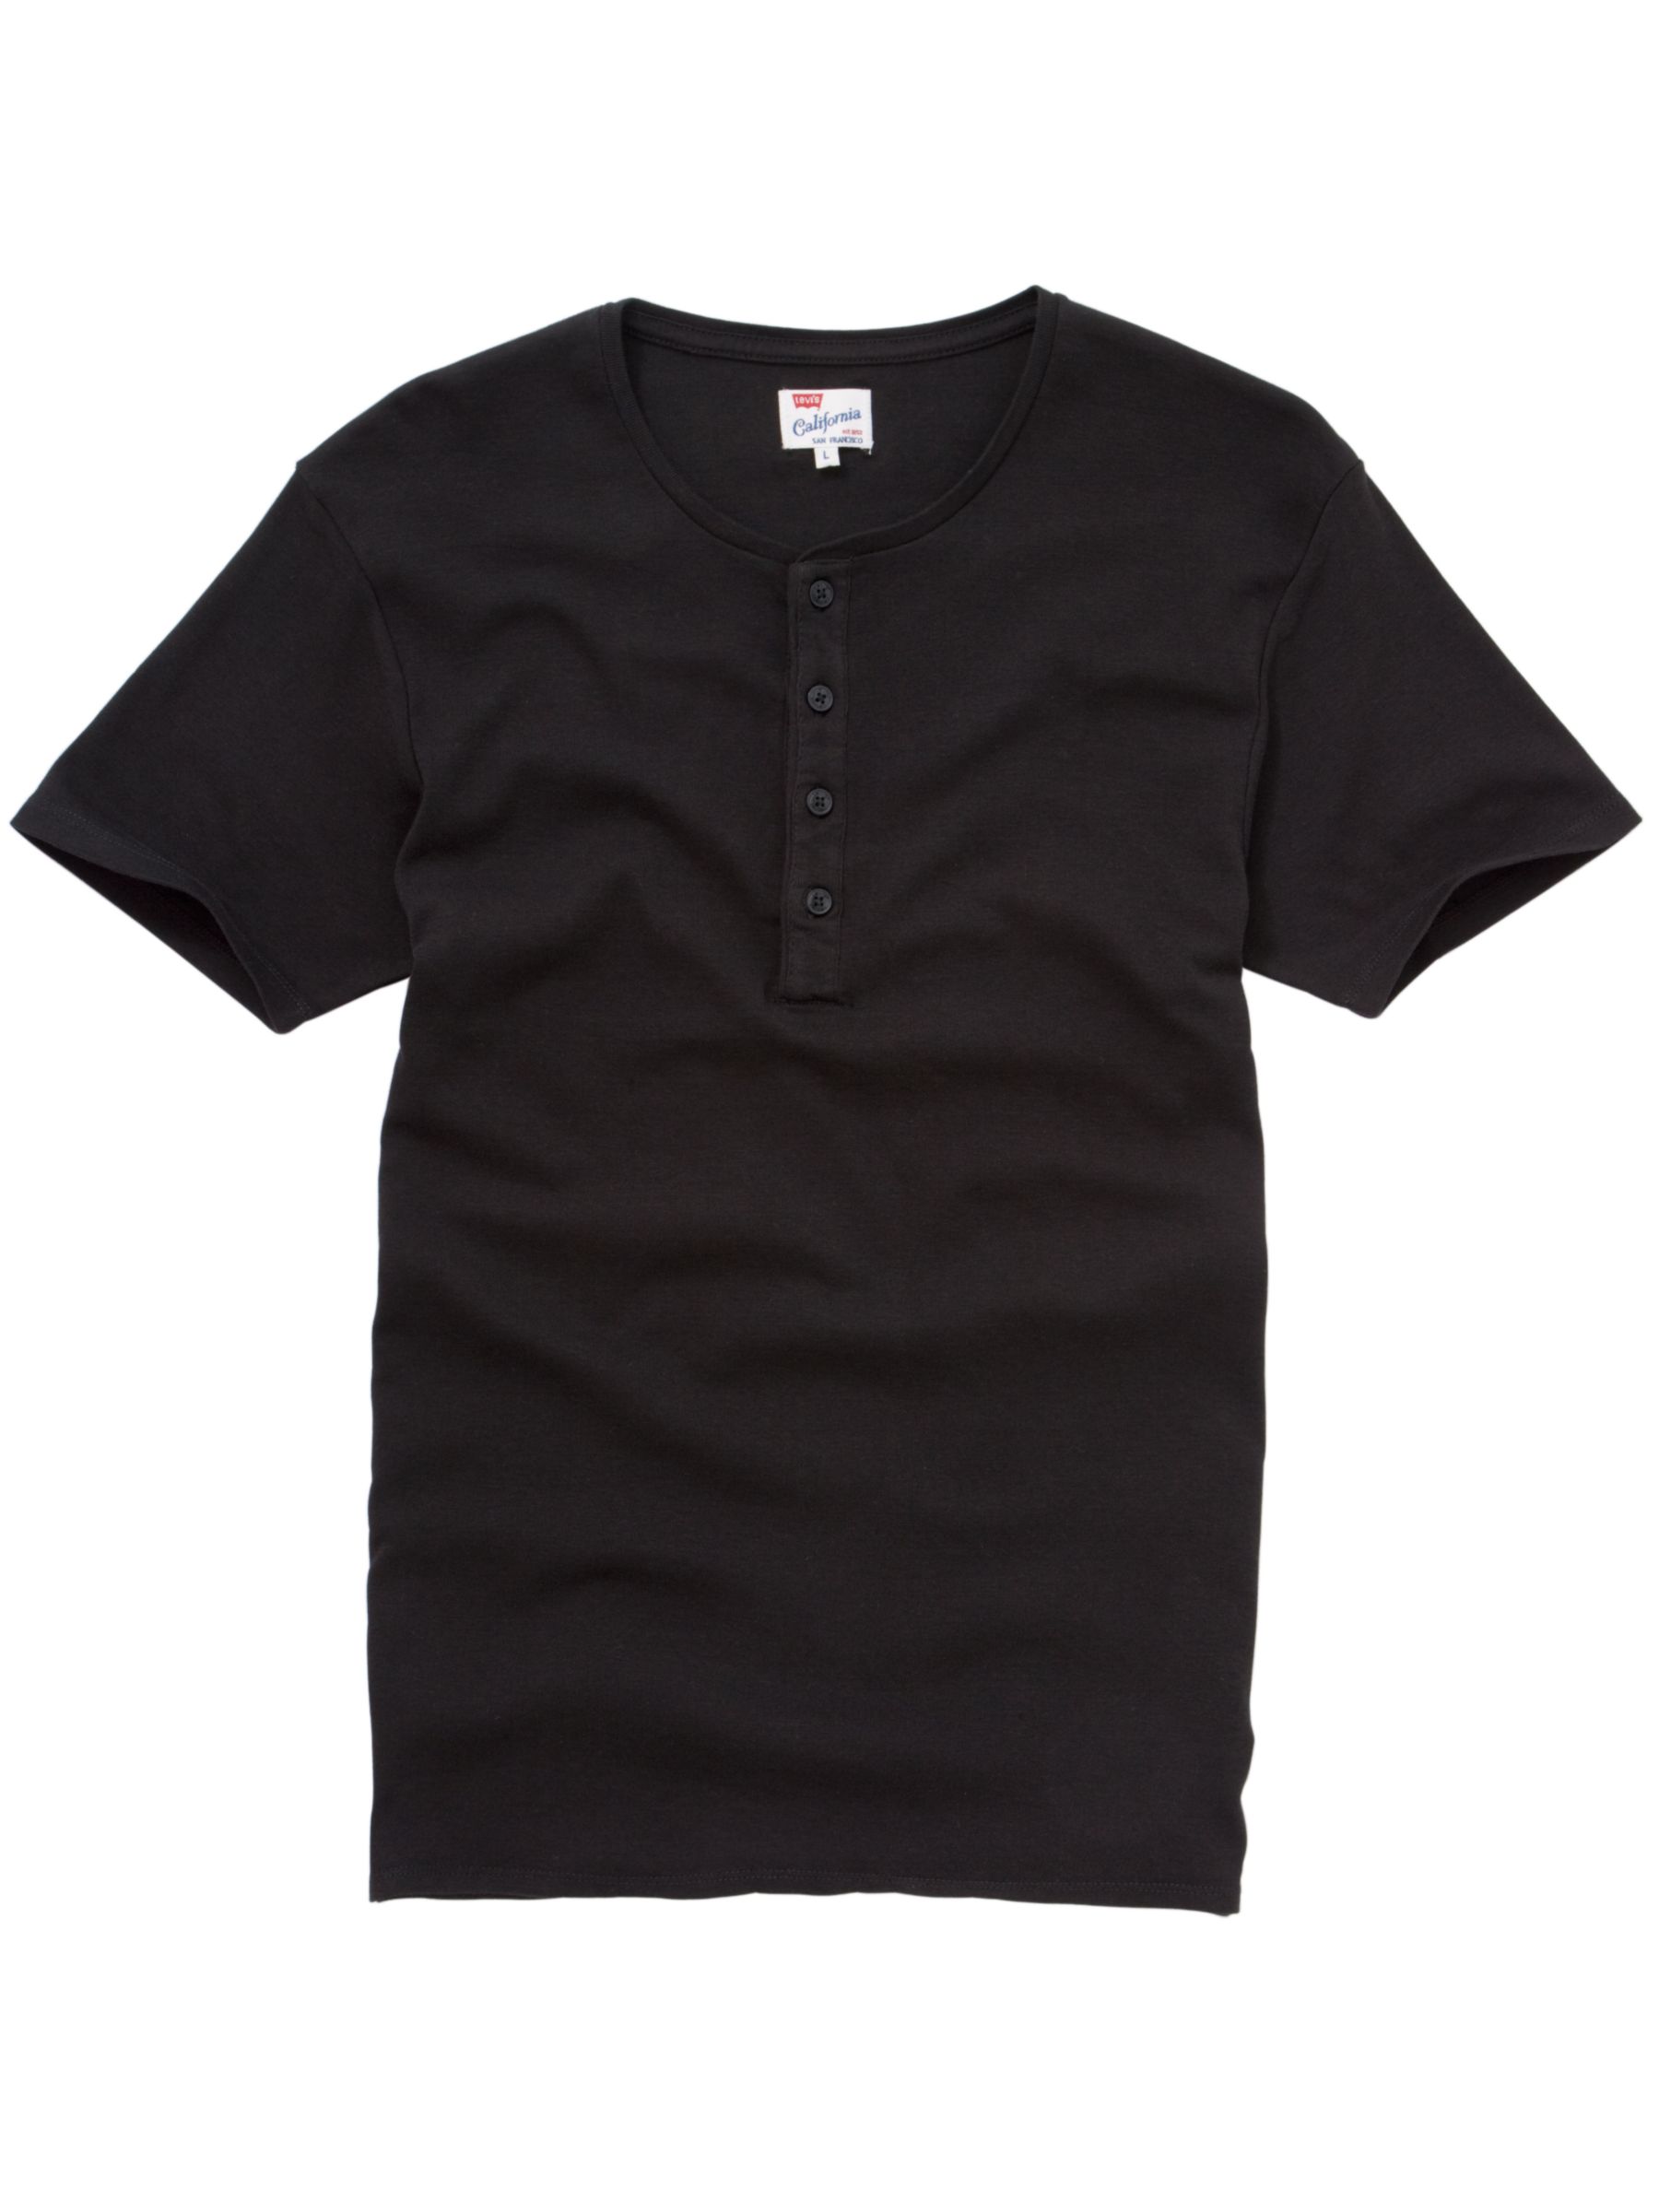 Ribbed Short Sleeve T-Shirt, Black